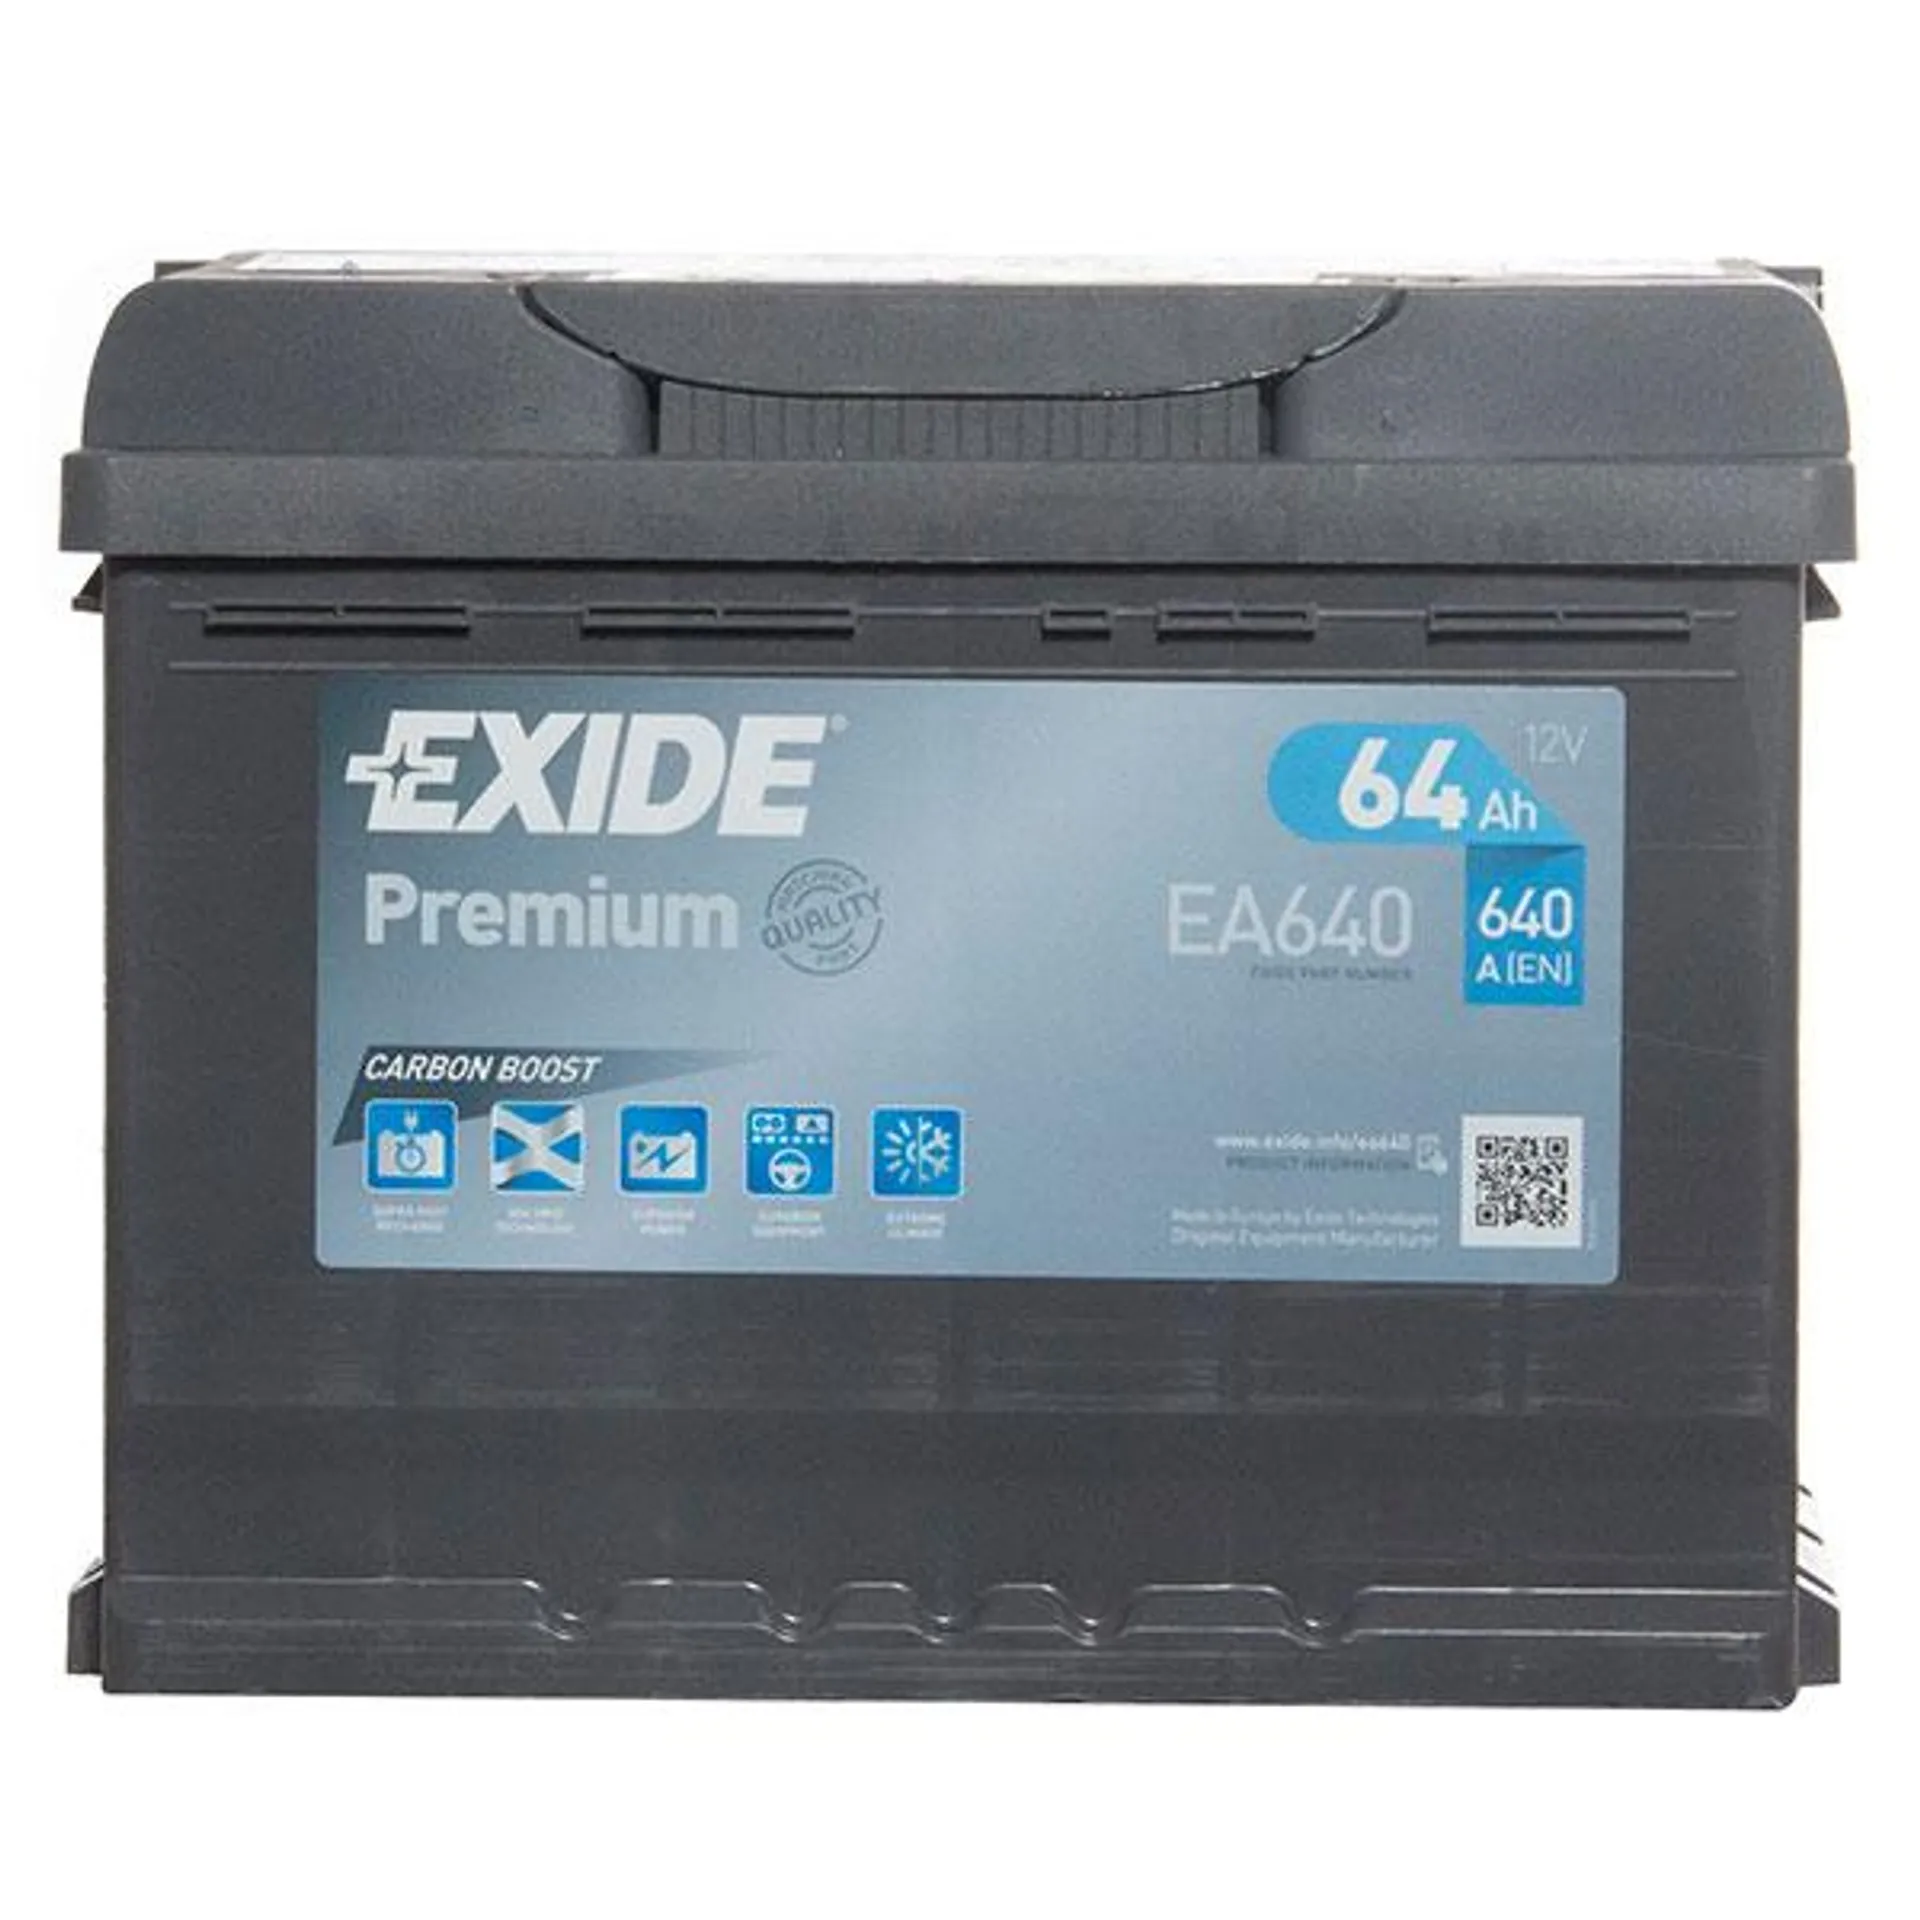 Exide 027 Car Battery (64Ah) - 5 Year Guarantee (EA640)